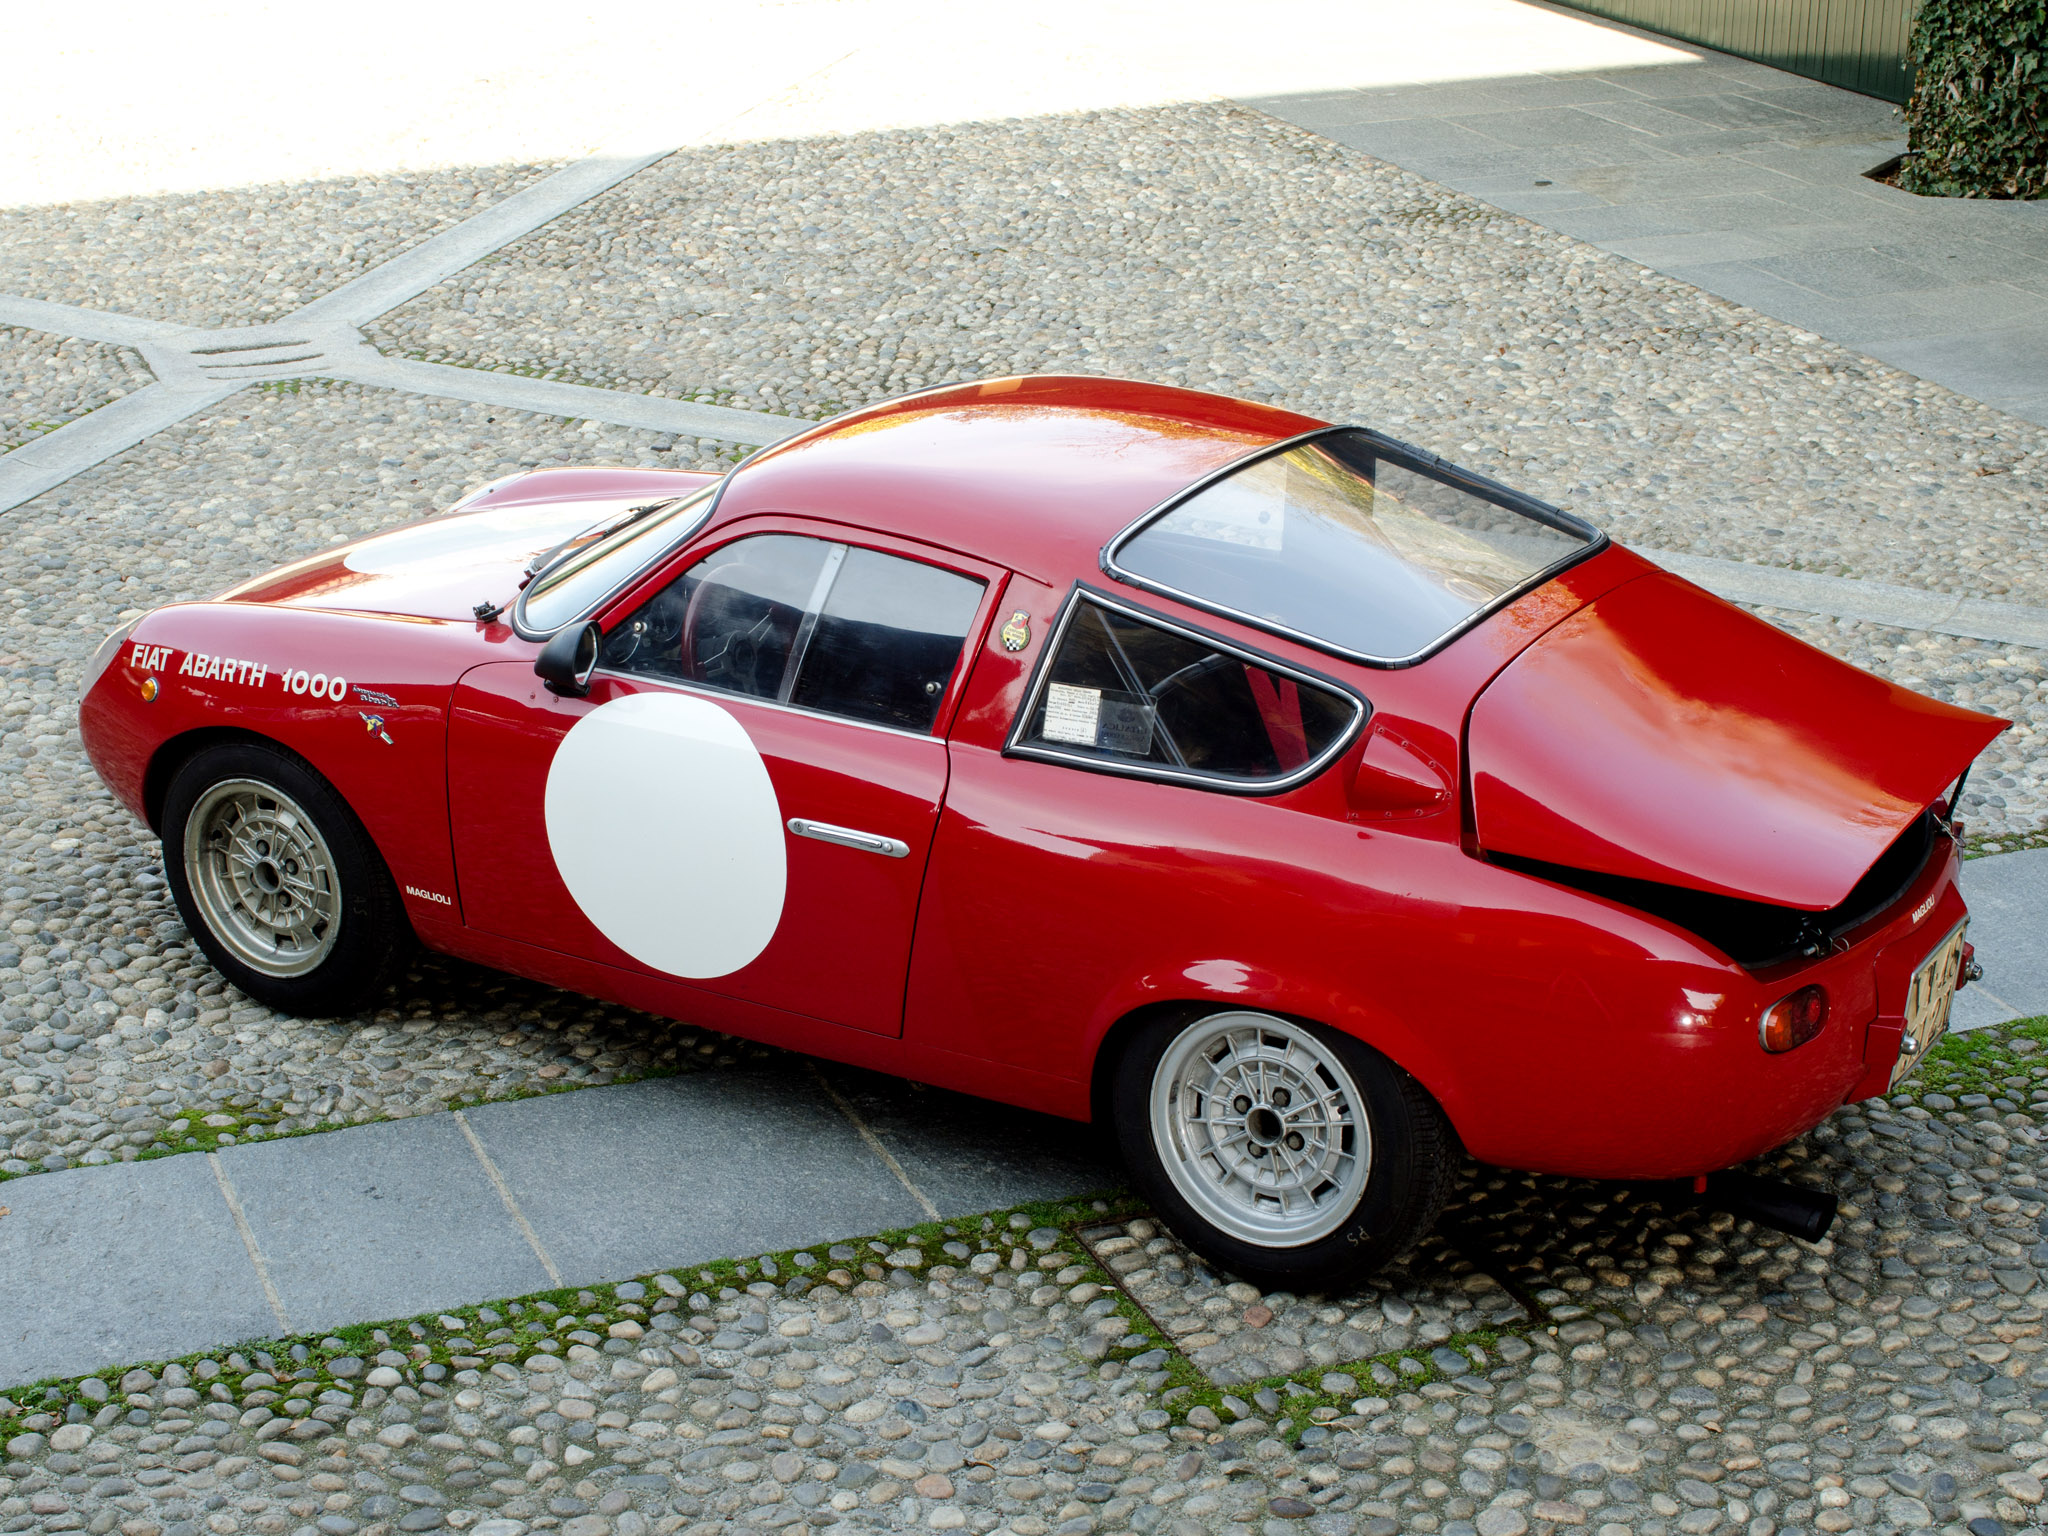 1961, Fiat, Abarth, 1000, Gt, Bialbero, Race, Racing, Rally, Classic, Hj Wallpaper